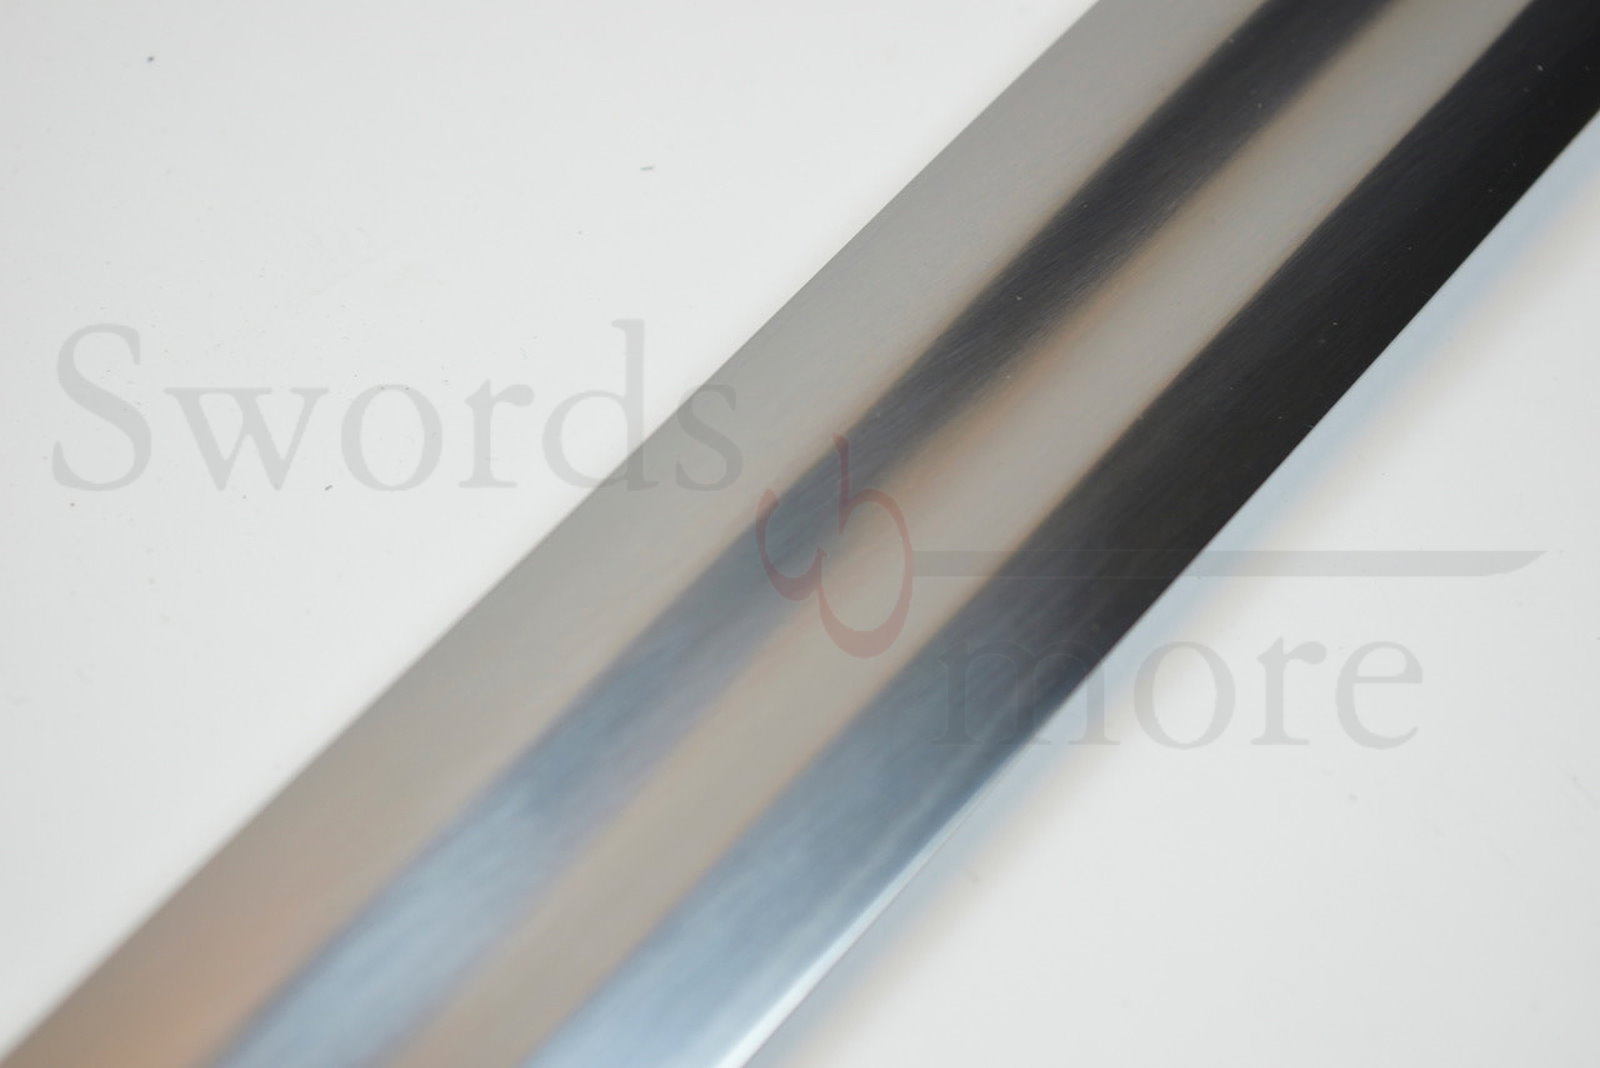 Suontaka Viking Sword